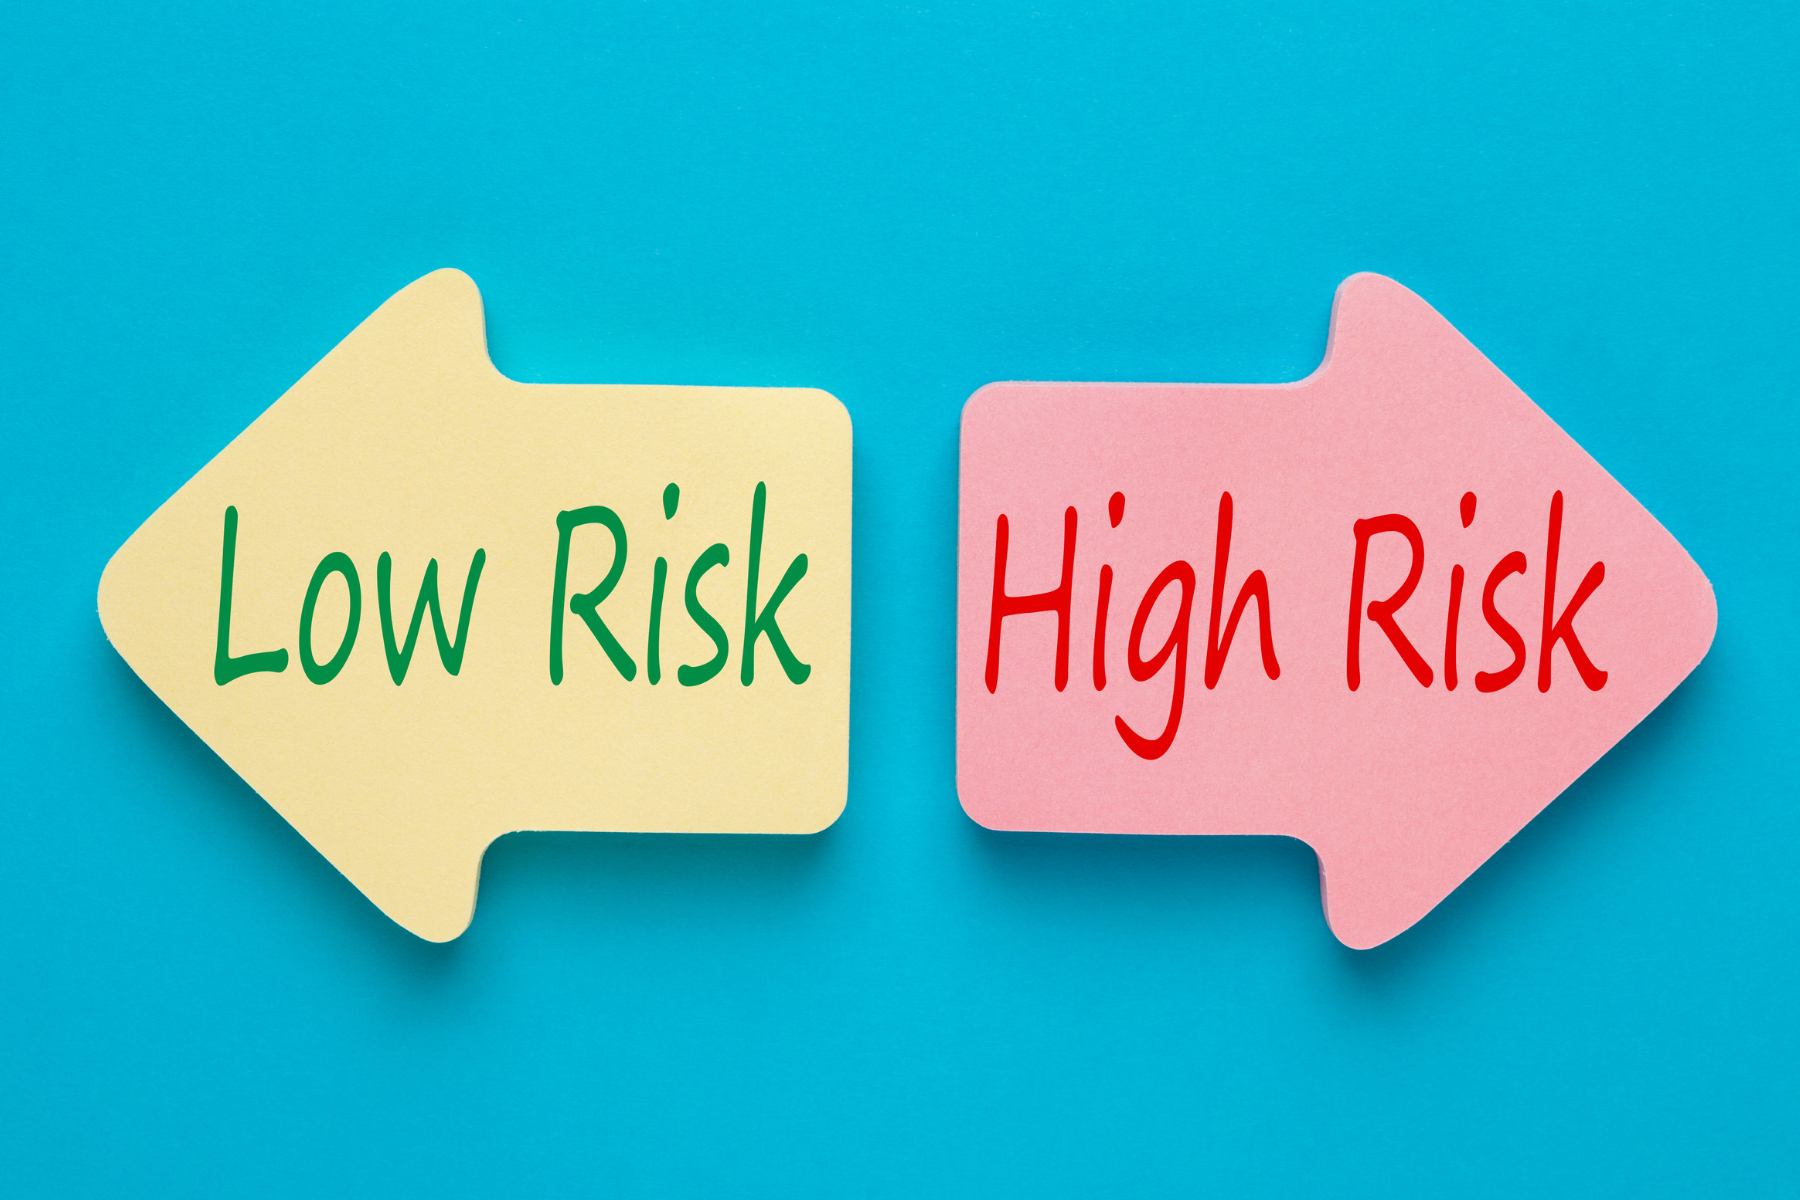 High risk. High risk Low risk. Low risk картинка. High Low risk картинка для презентации.